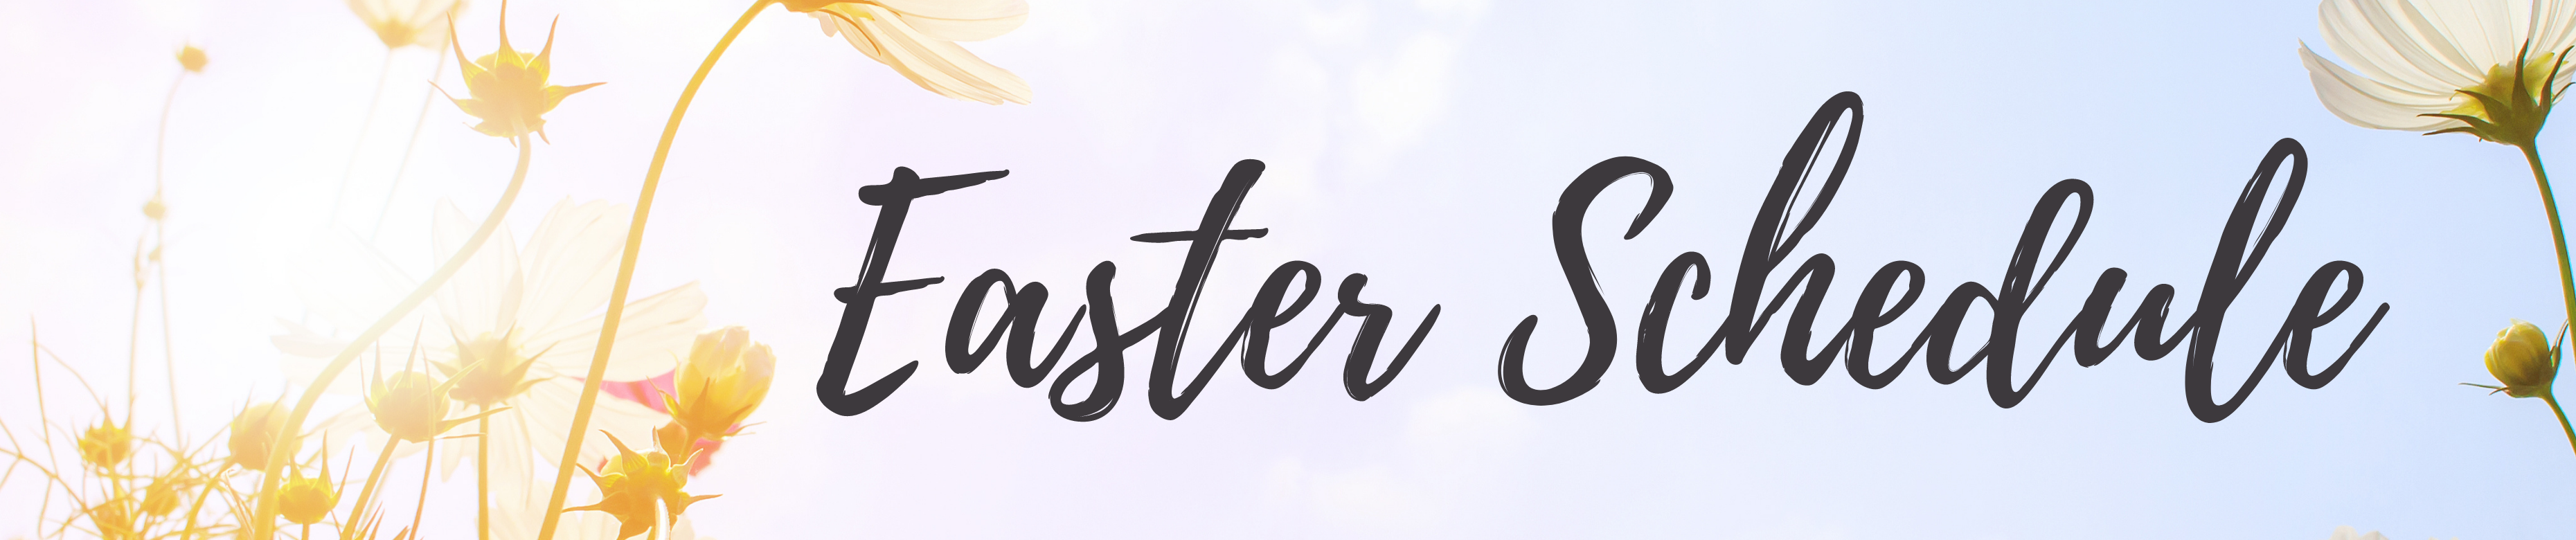 Easter Schedule banner